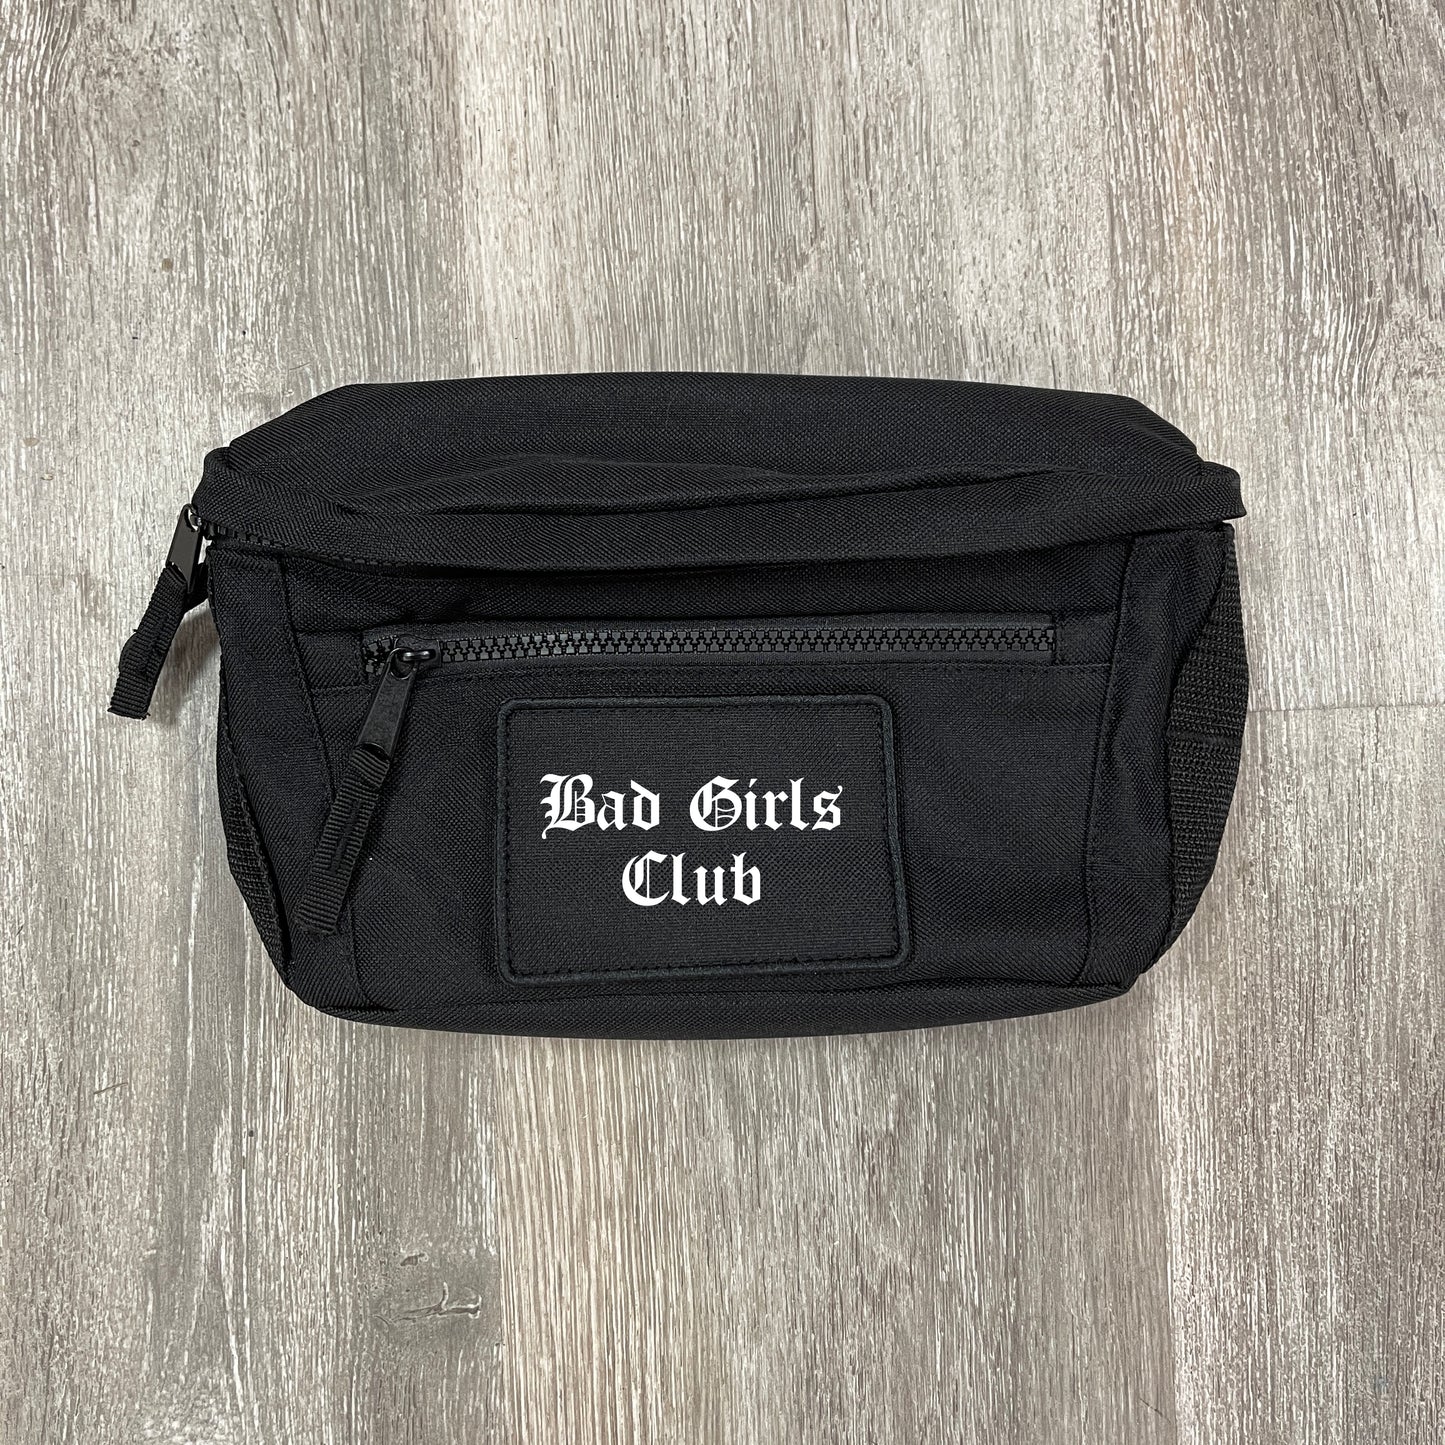 BAD GIRLS CLUB BUM BAG